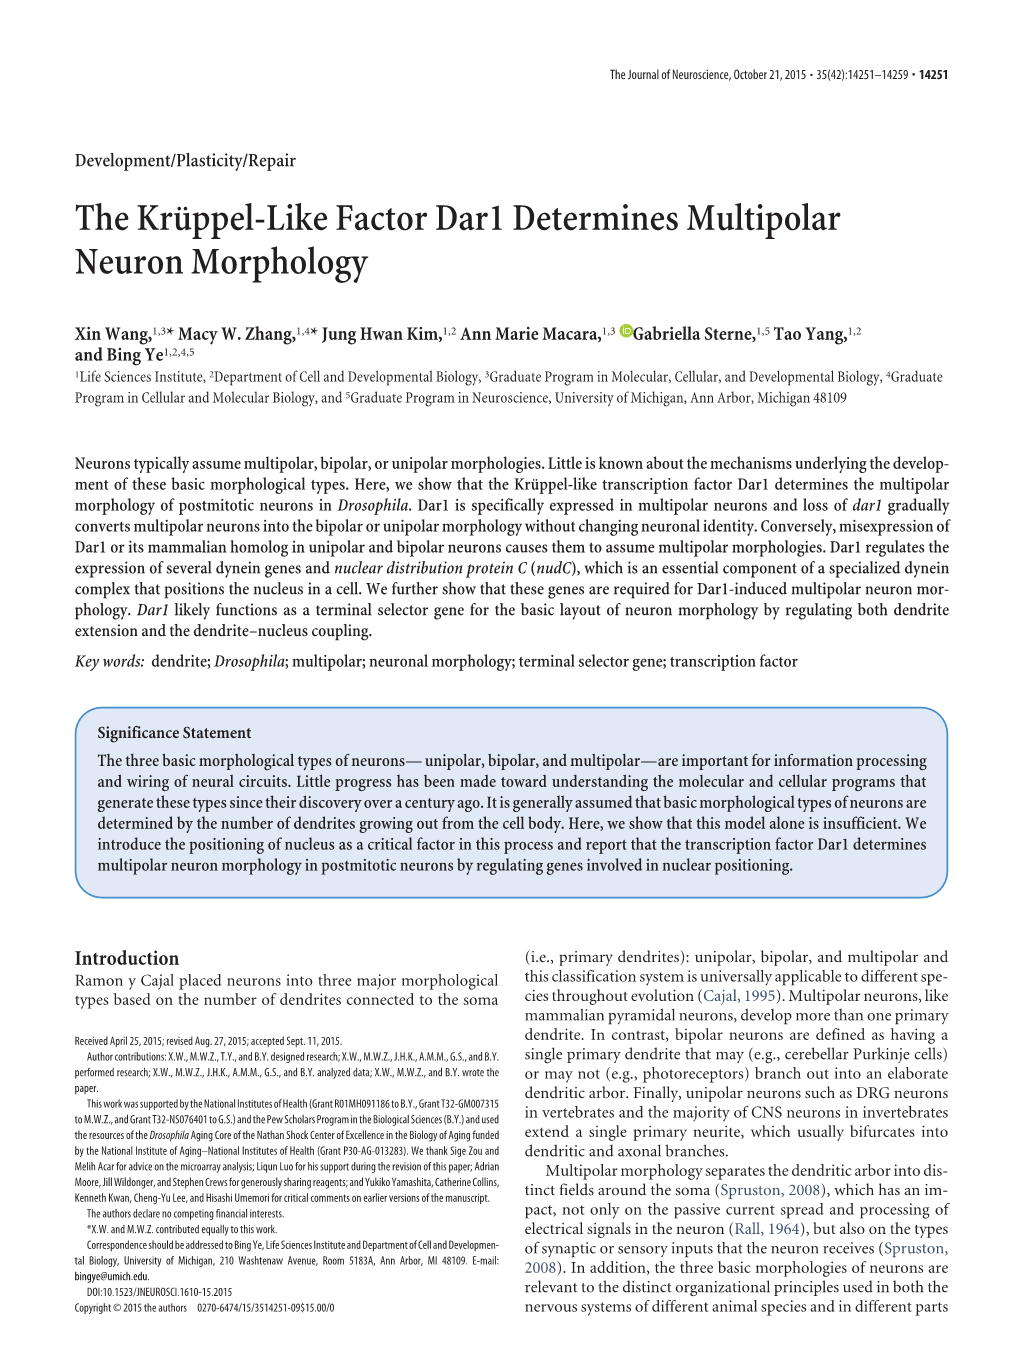 The Krüppel-Like Factor Dar1 Determines Multipolar Neuron